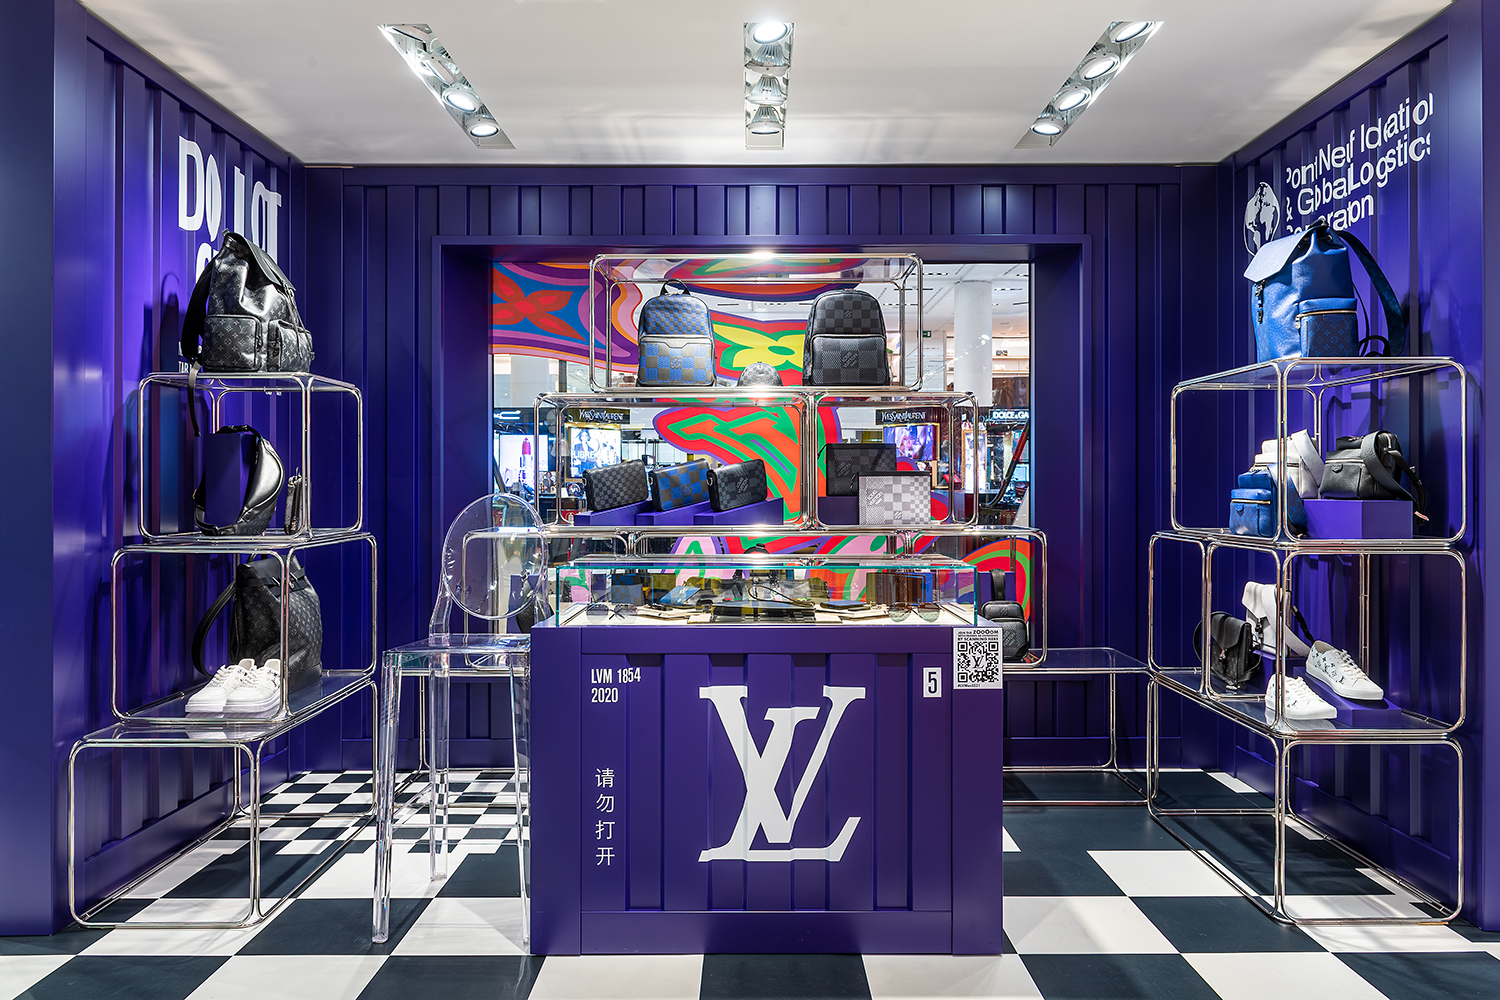 Inside the Virgil Abloh Louis Vuitton SS19 pop-up store, British GQ